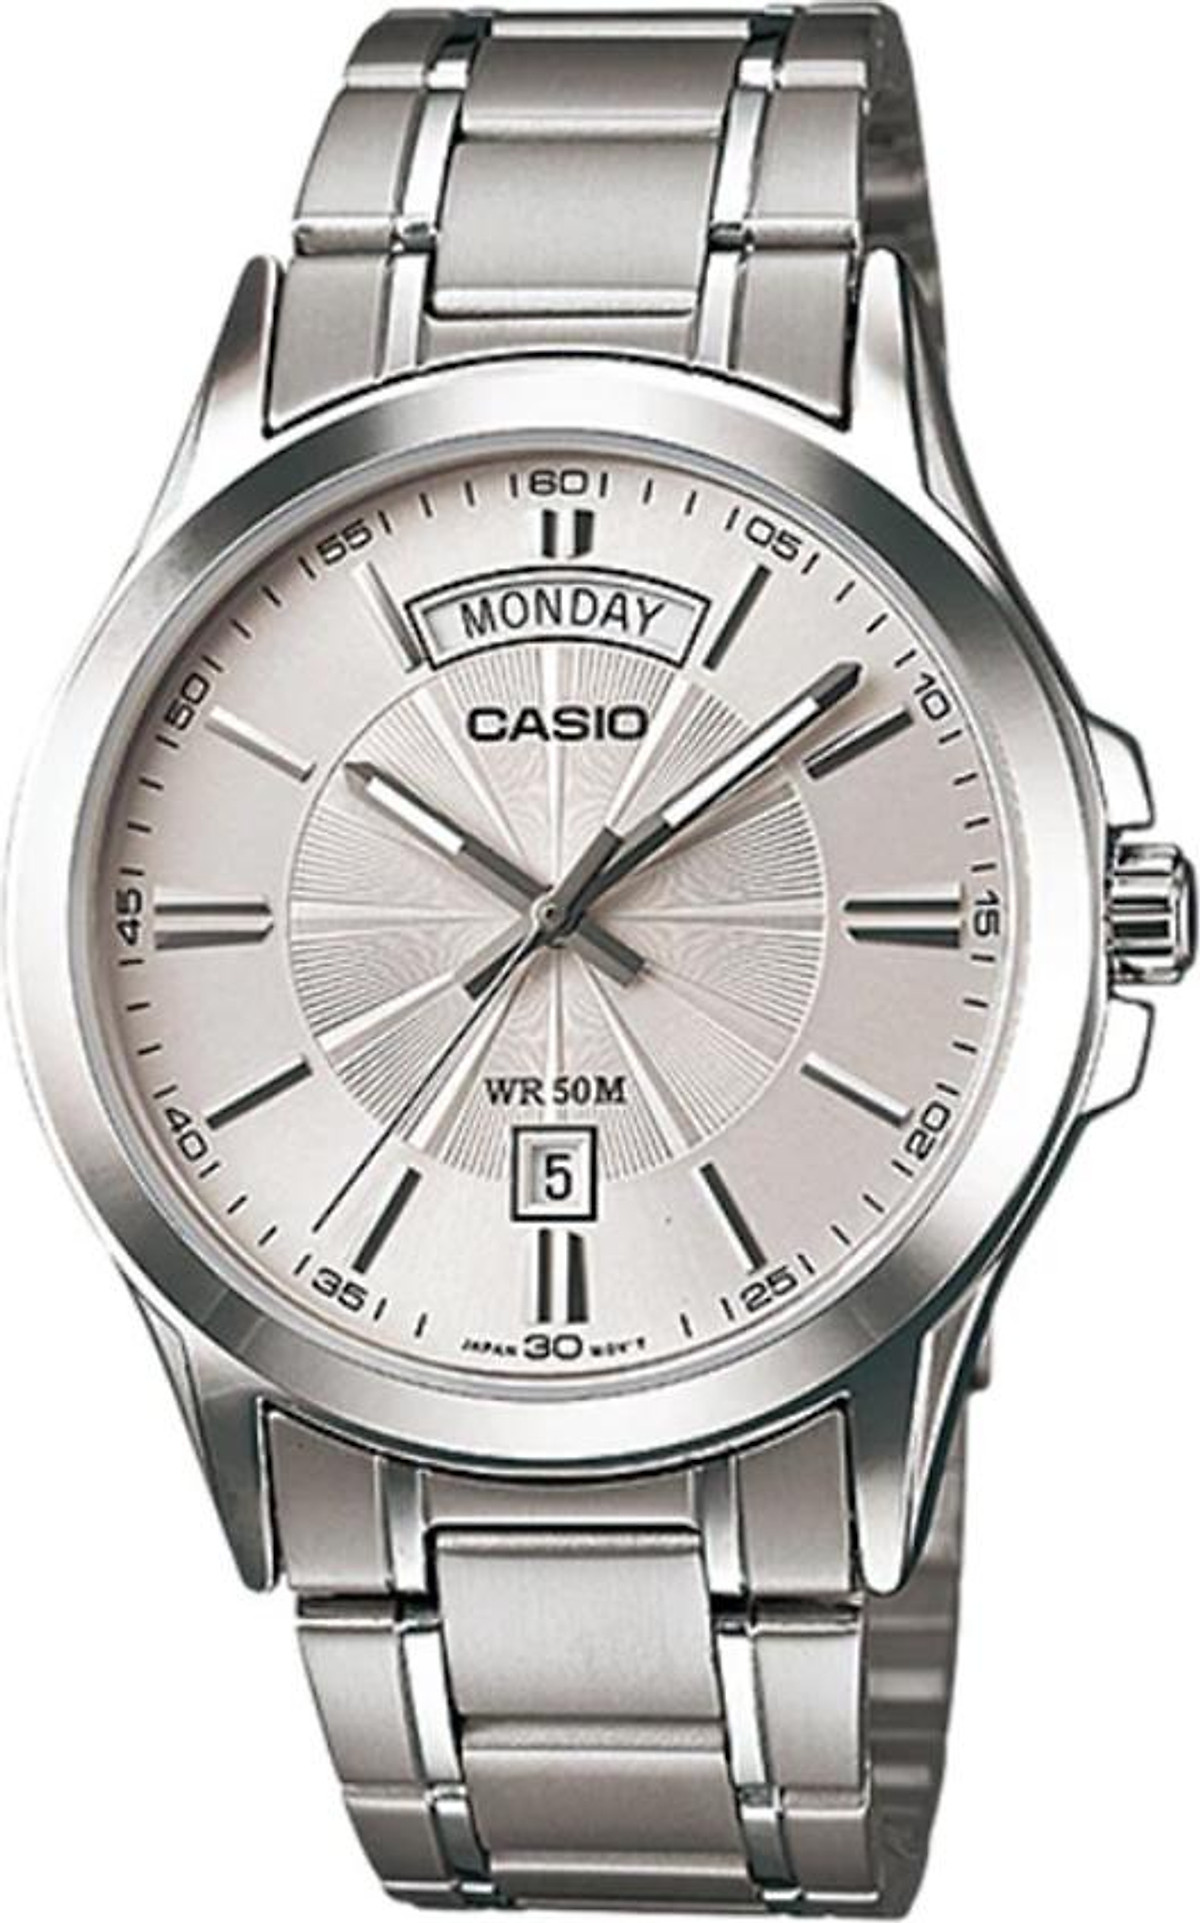 Khám phá đồng hồ Casio MTP-1381D-7AVDF